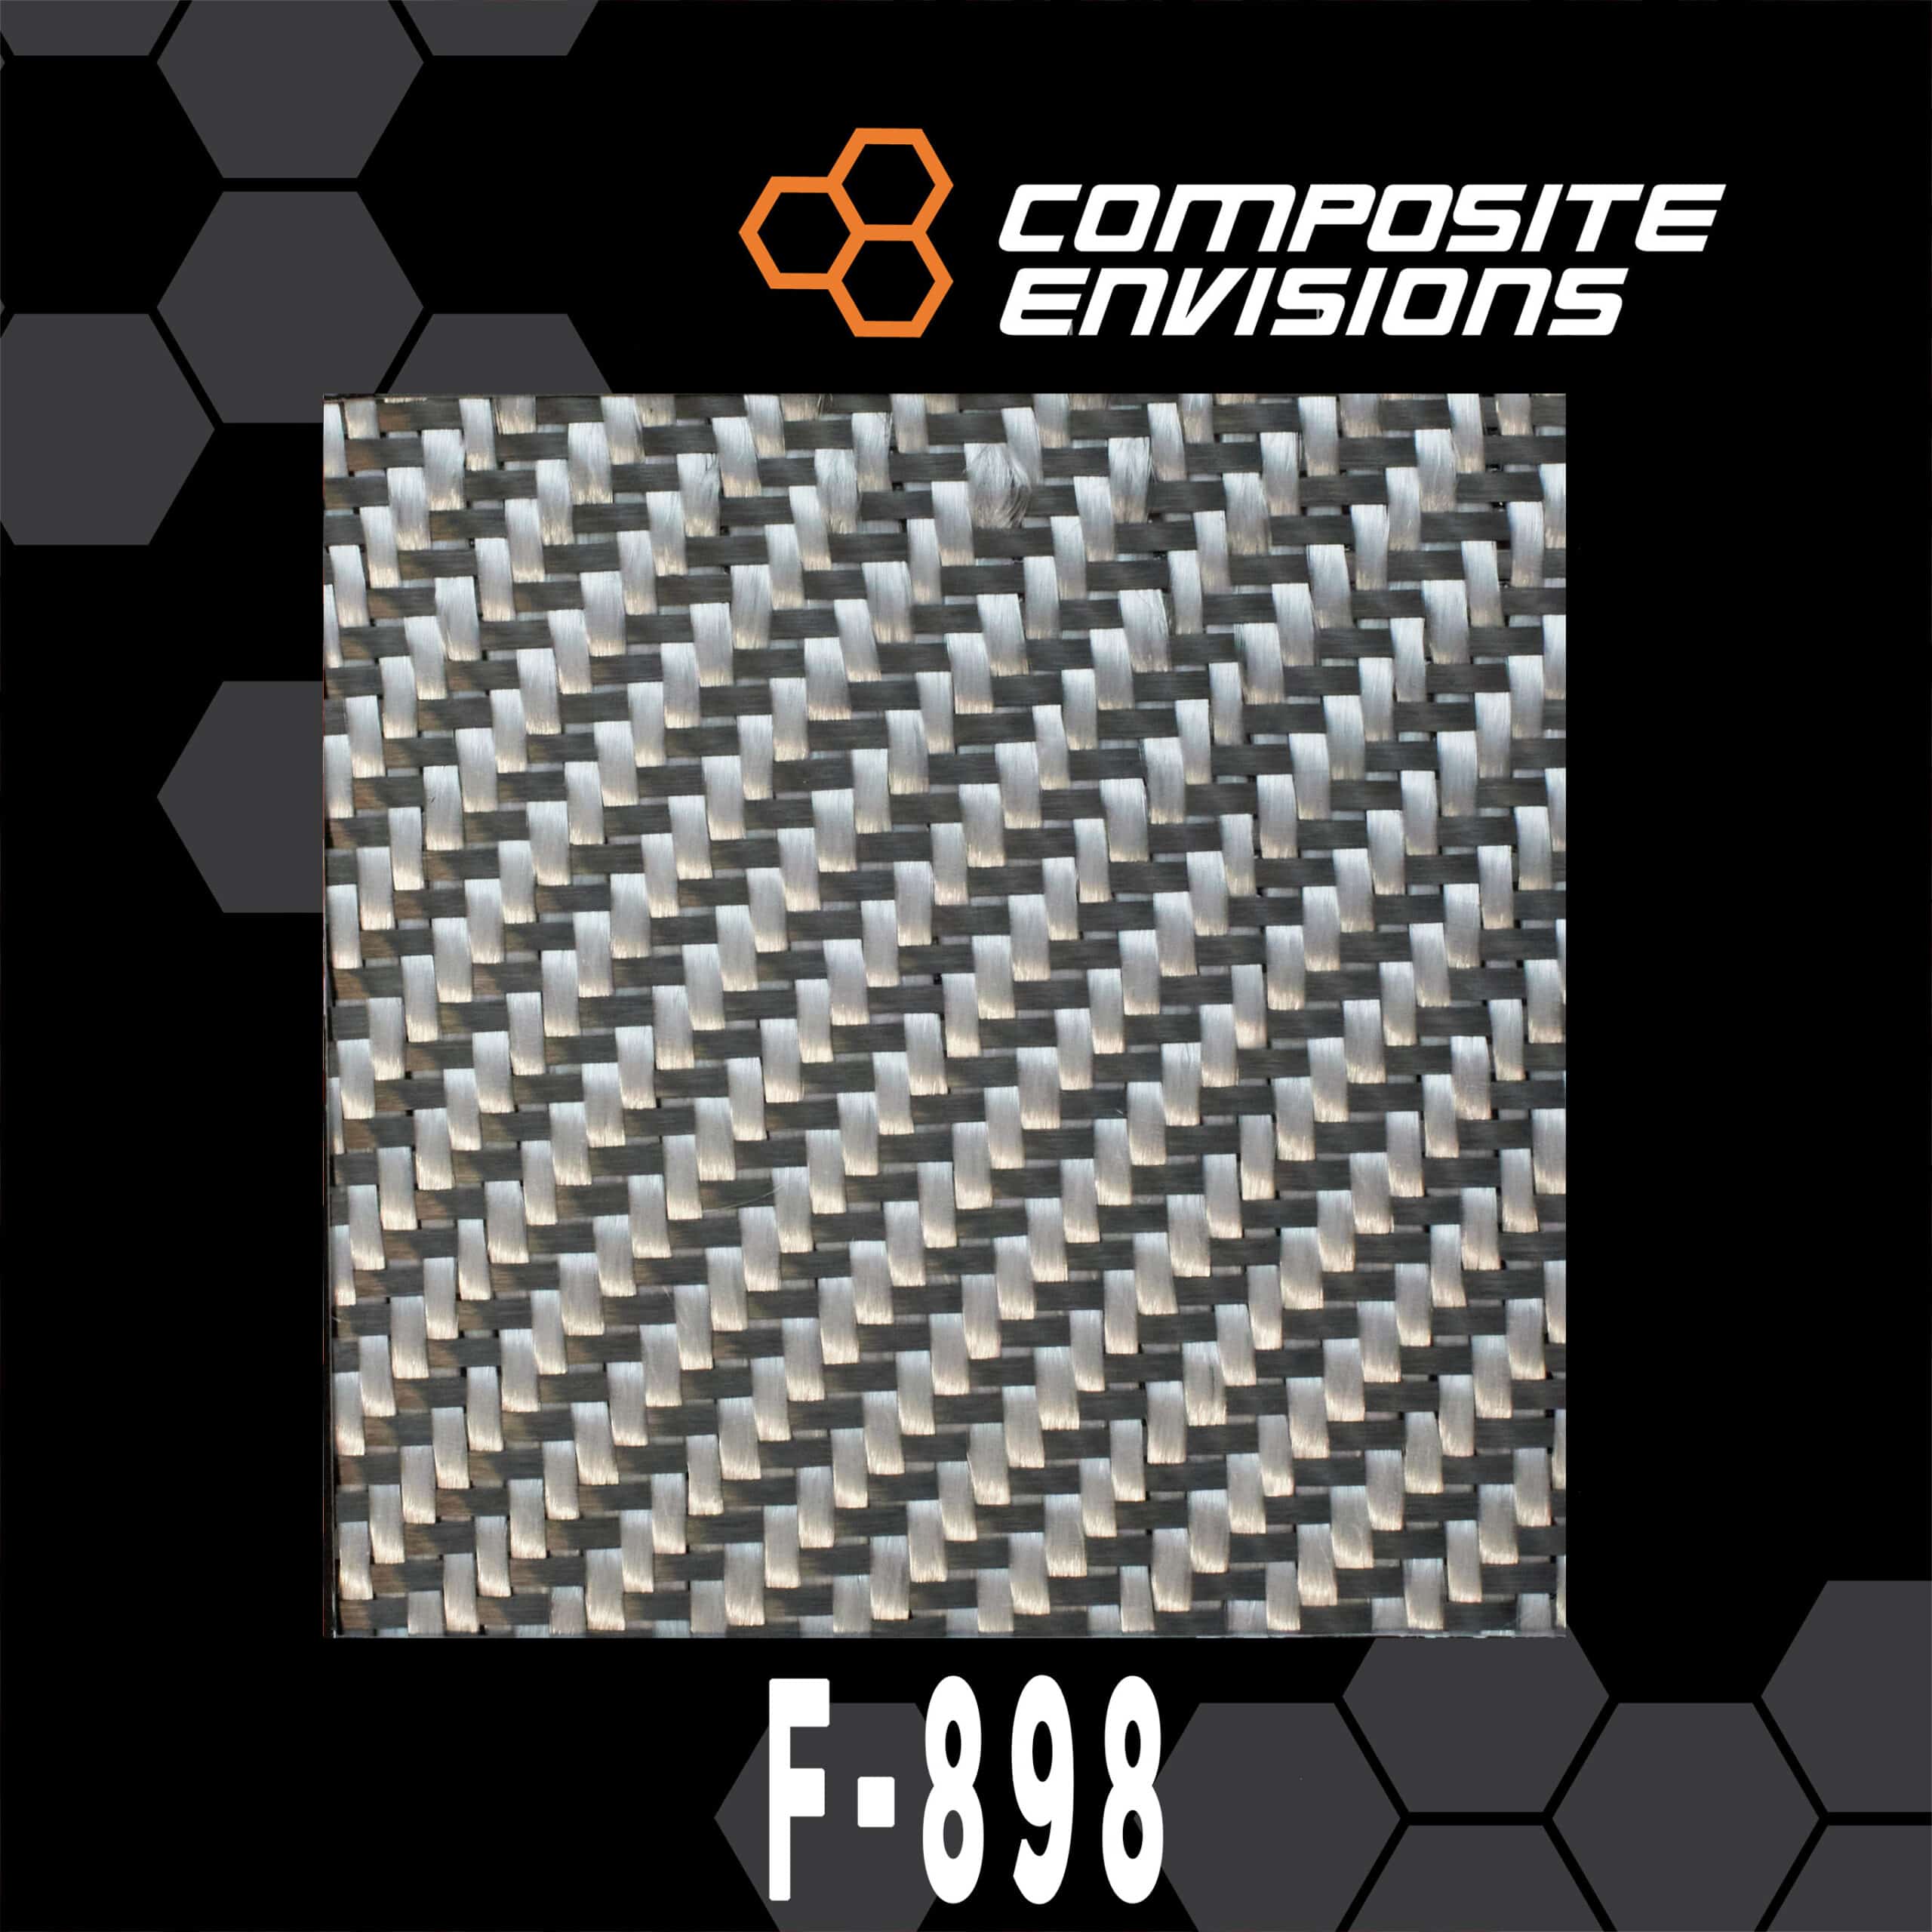 Carbon Fiber/Spectra 1000 Fabric 2x2 Twill 3k 6oz/203gsm-Sample (4x4)